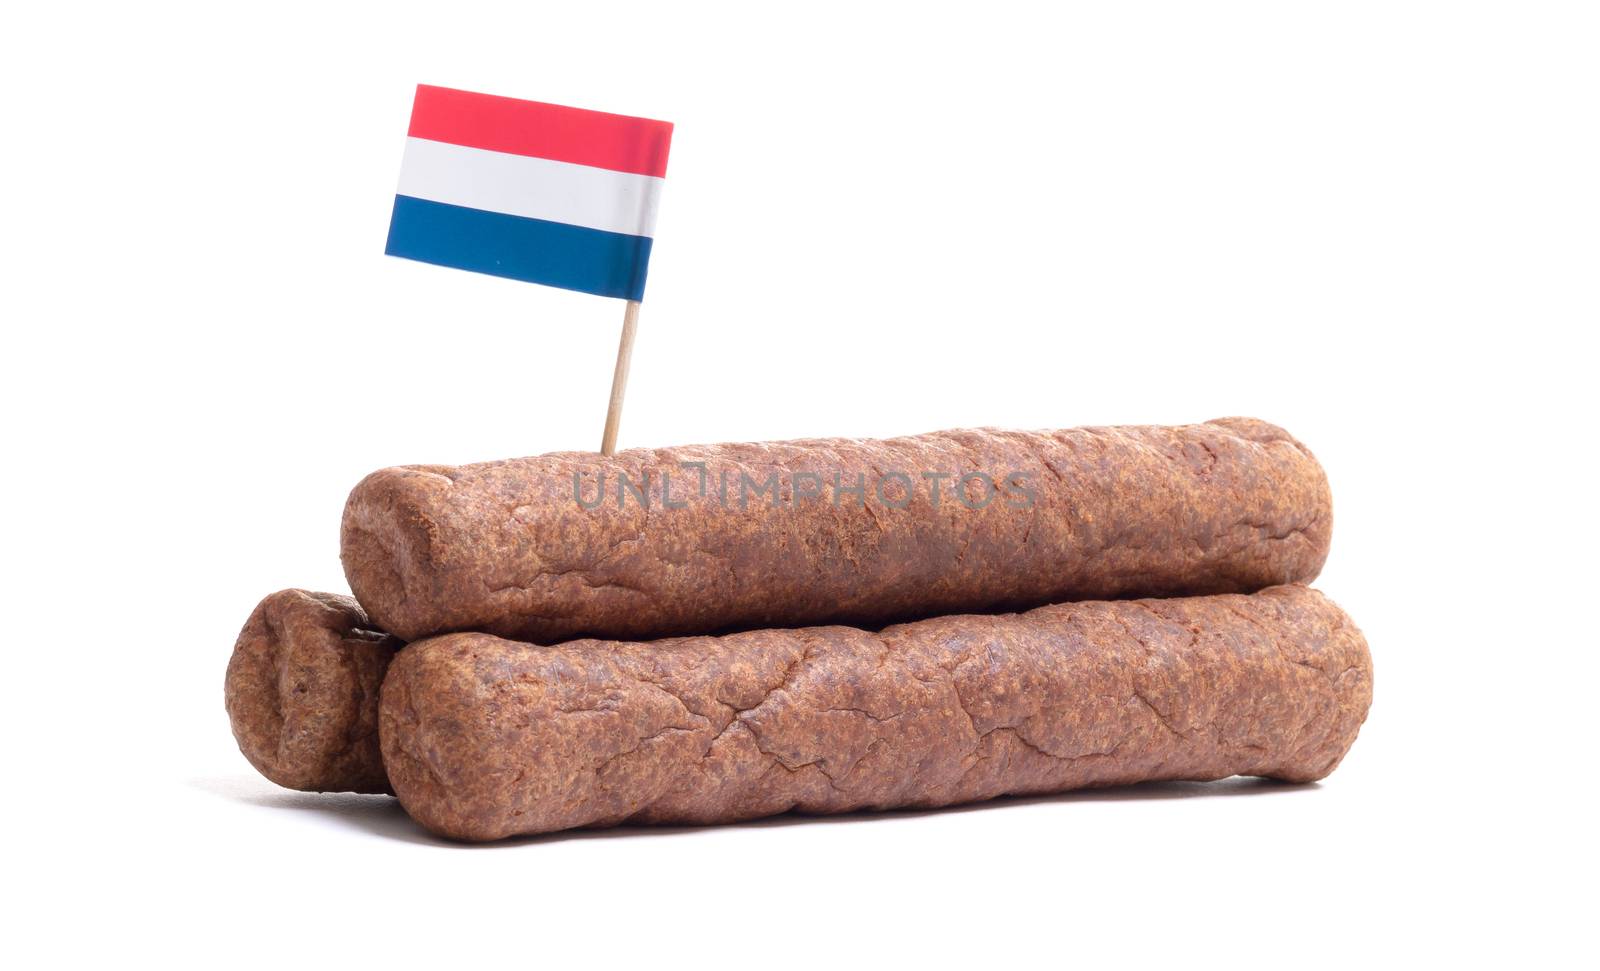 Three frikadellen, a Dutch fast food snack by michaklootwijk